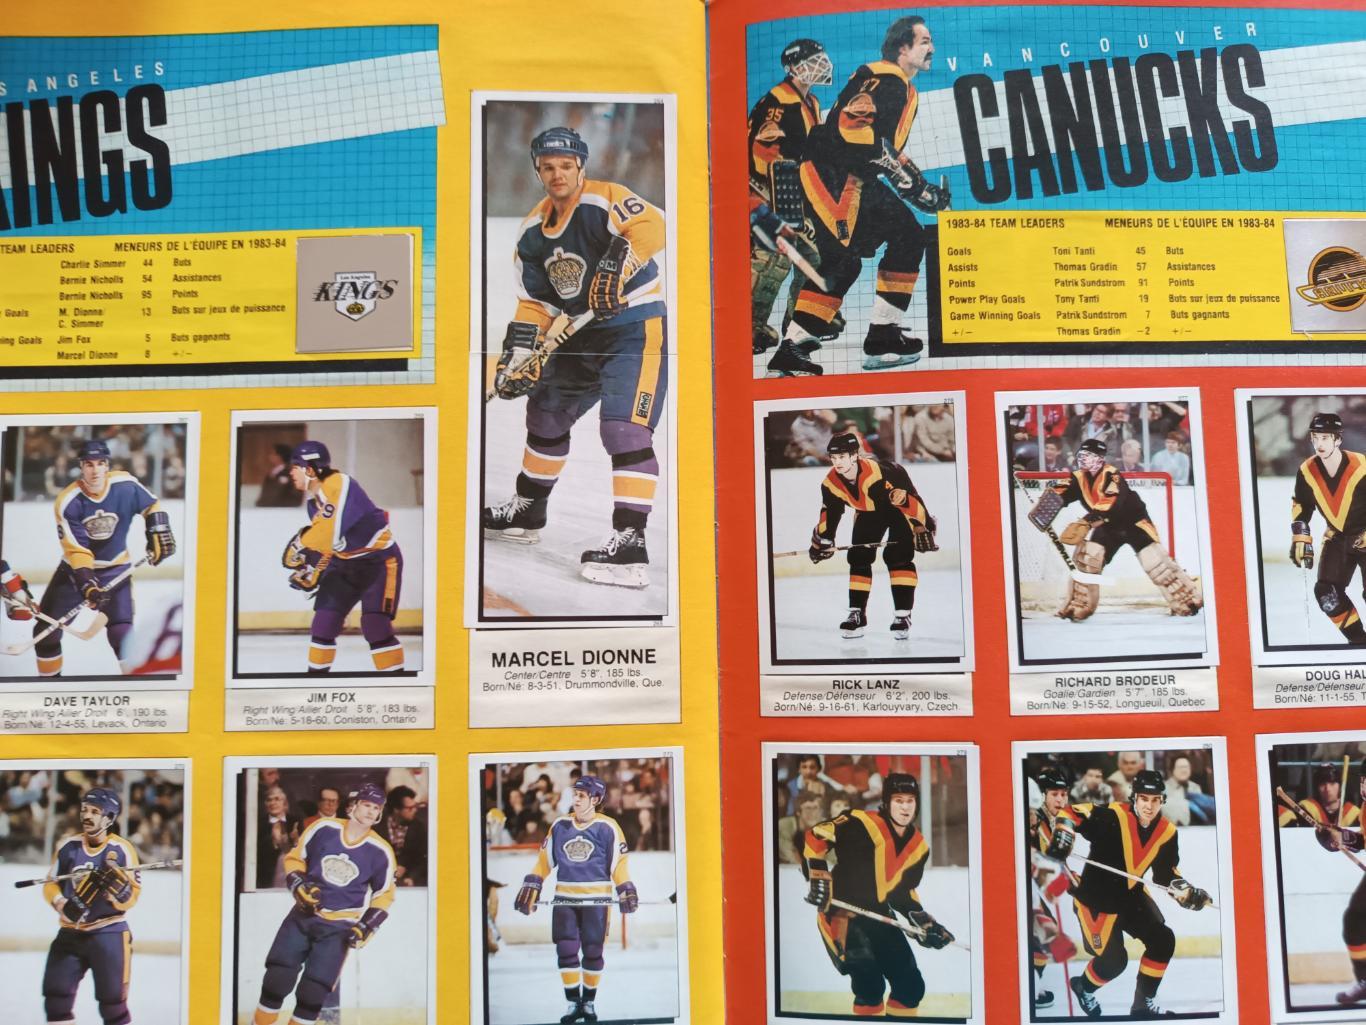 ХОККЕЙ АЛЬБОМ НАКЛЕЕК НХЛ О ПИИ ЧИИ 1984 NHL O-PEE-CHEE STICKER ALBUM 7